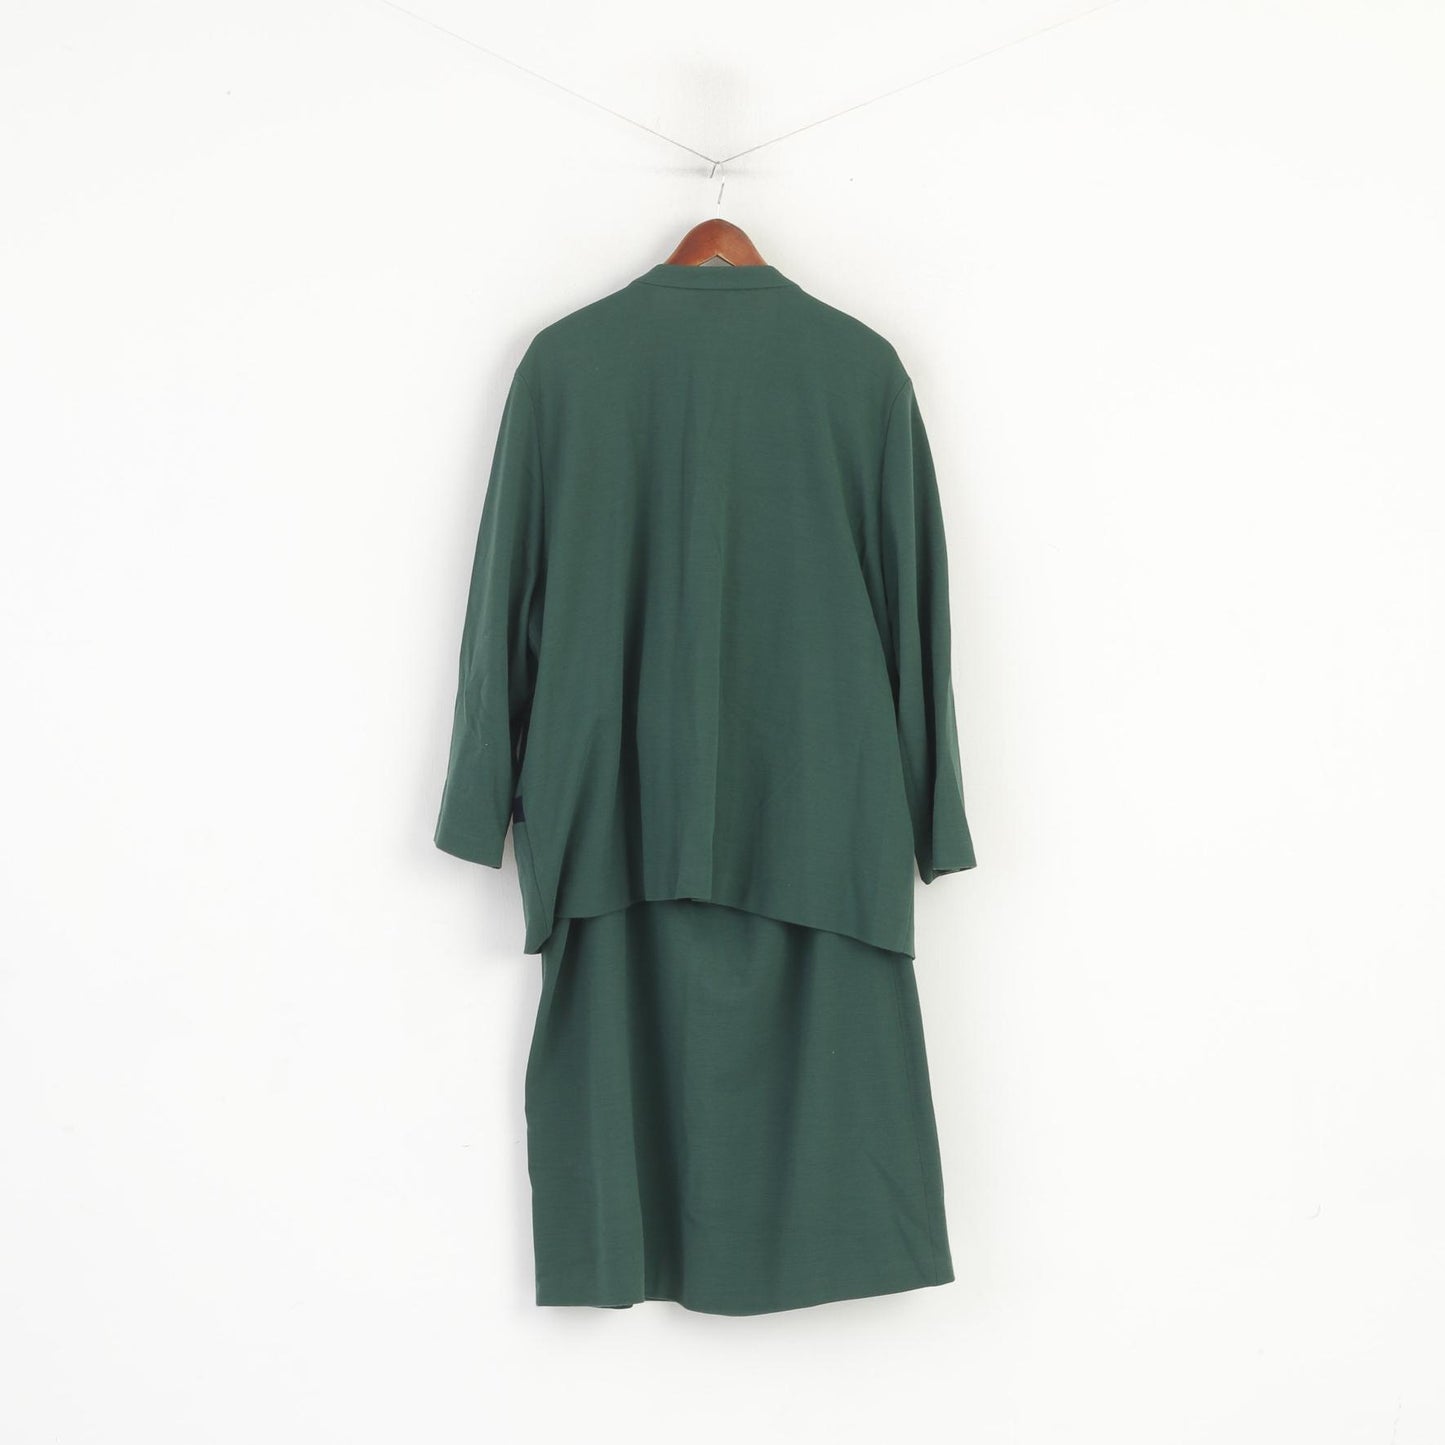 Franken Walder Women 52 XXL Suit Green 2 Piece Green Vintage Jacket Skirt Wool Blend